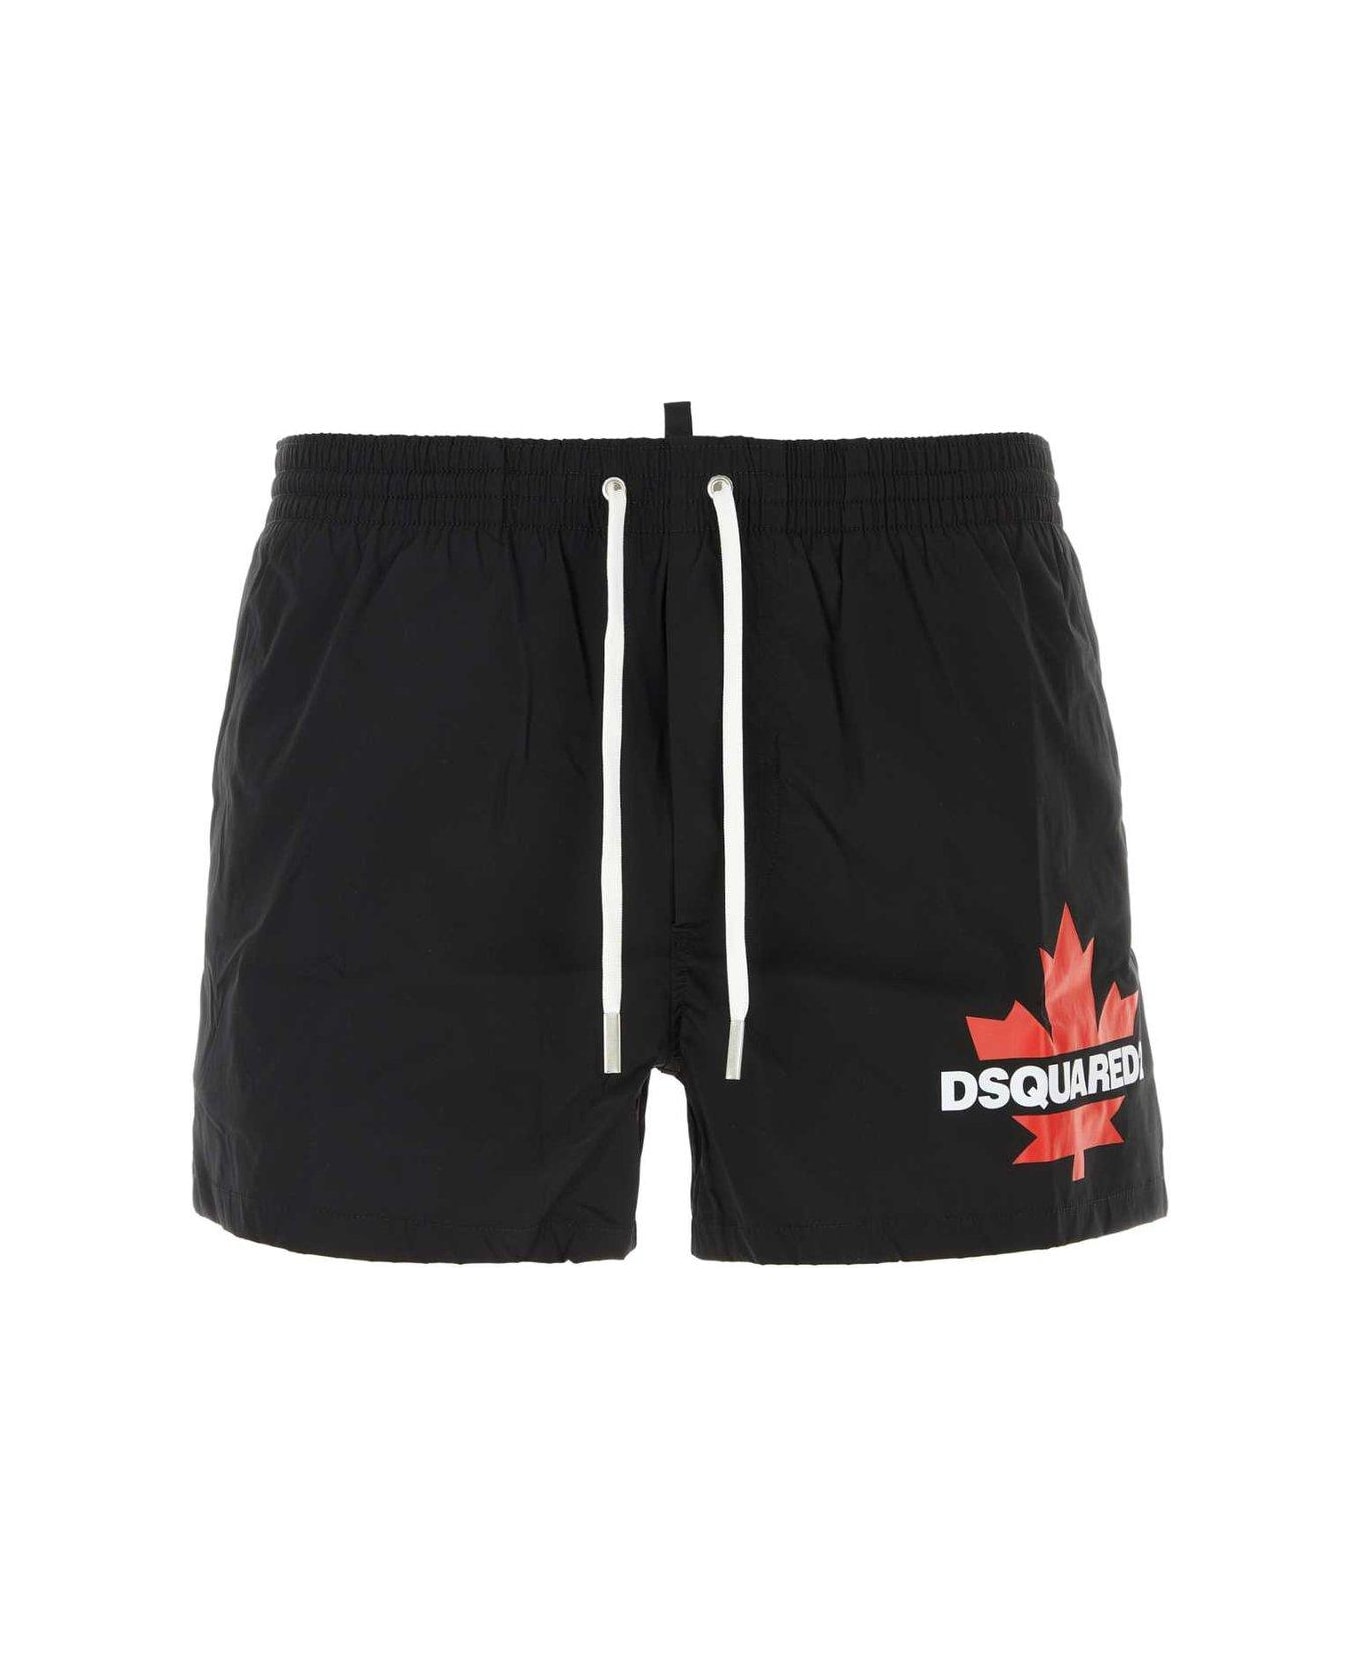 Dsquared2 Logo Printed Drawstring Swimming Shorts - BLACK